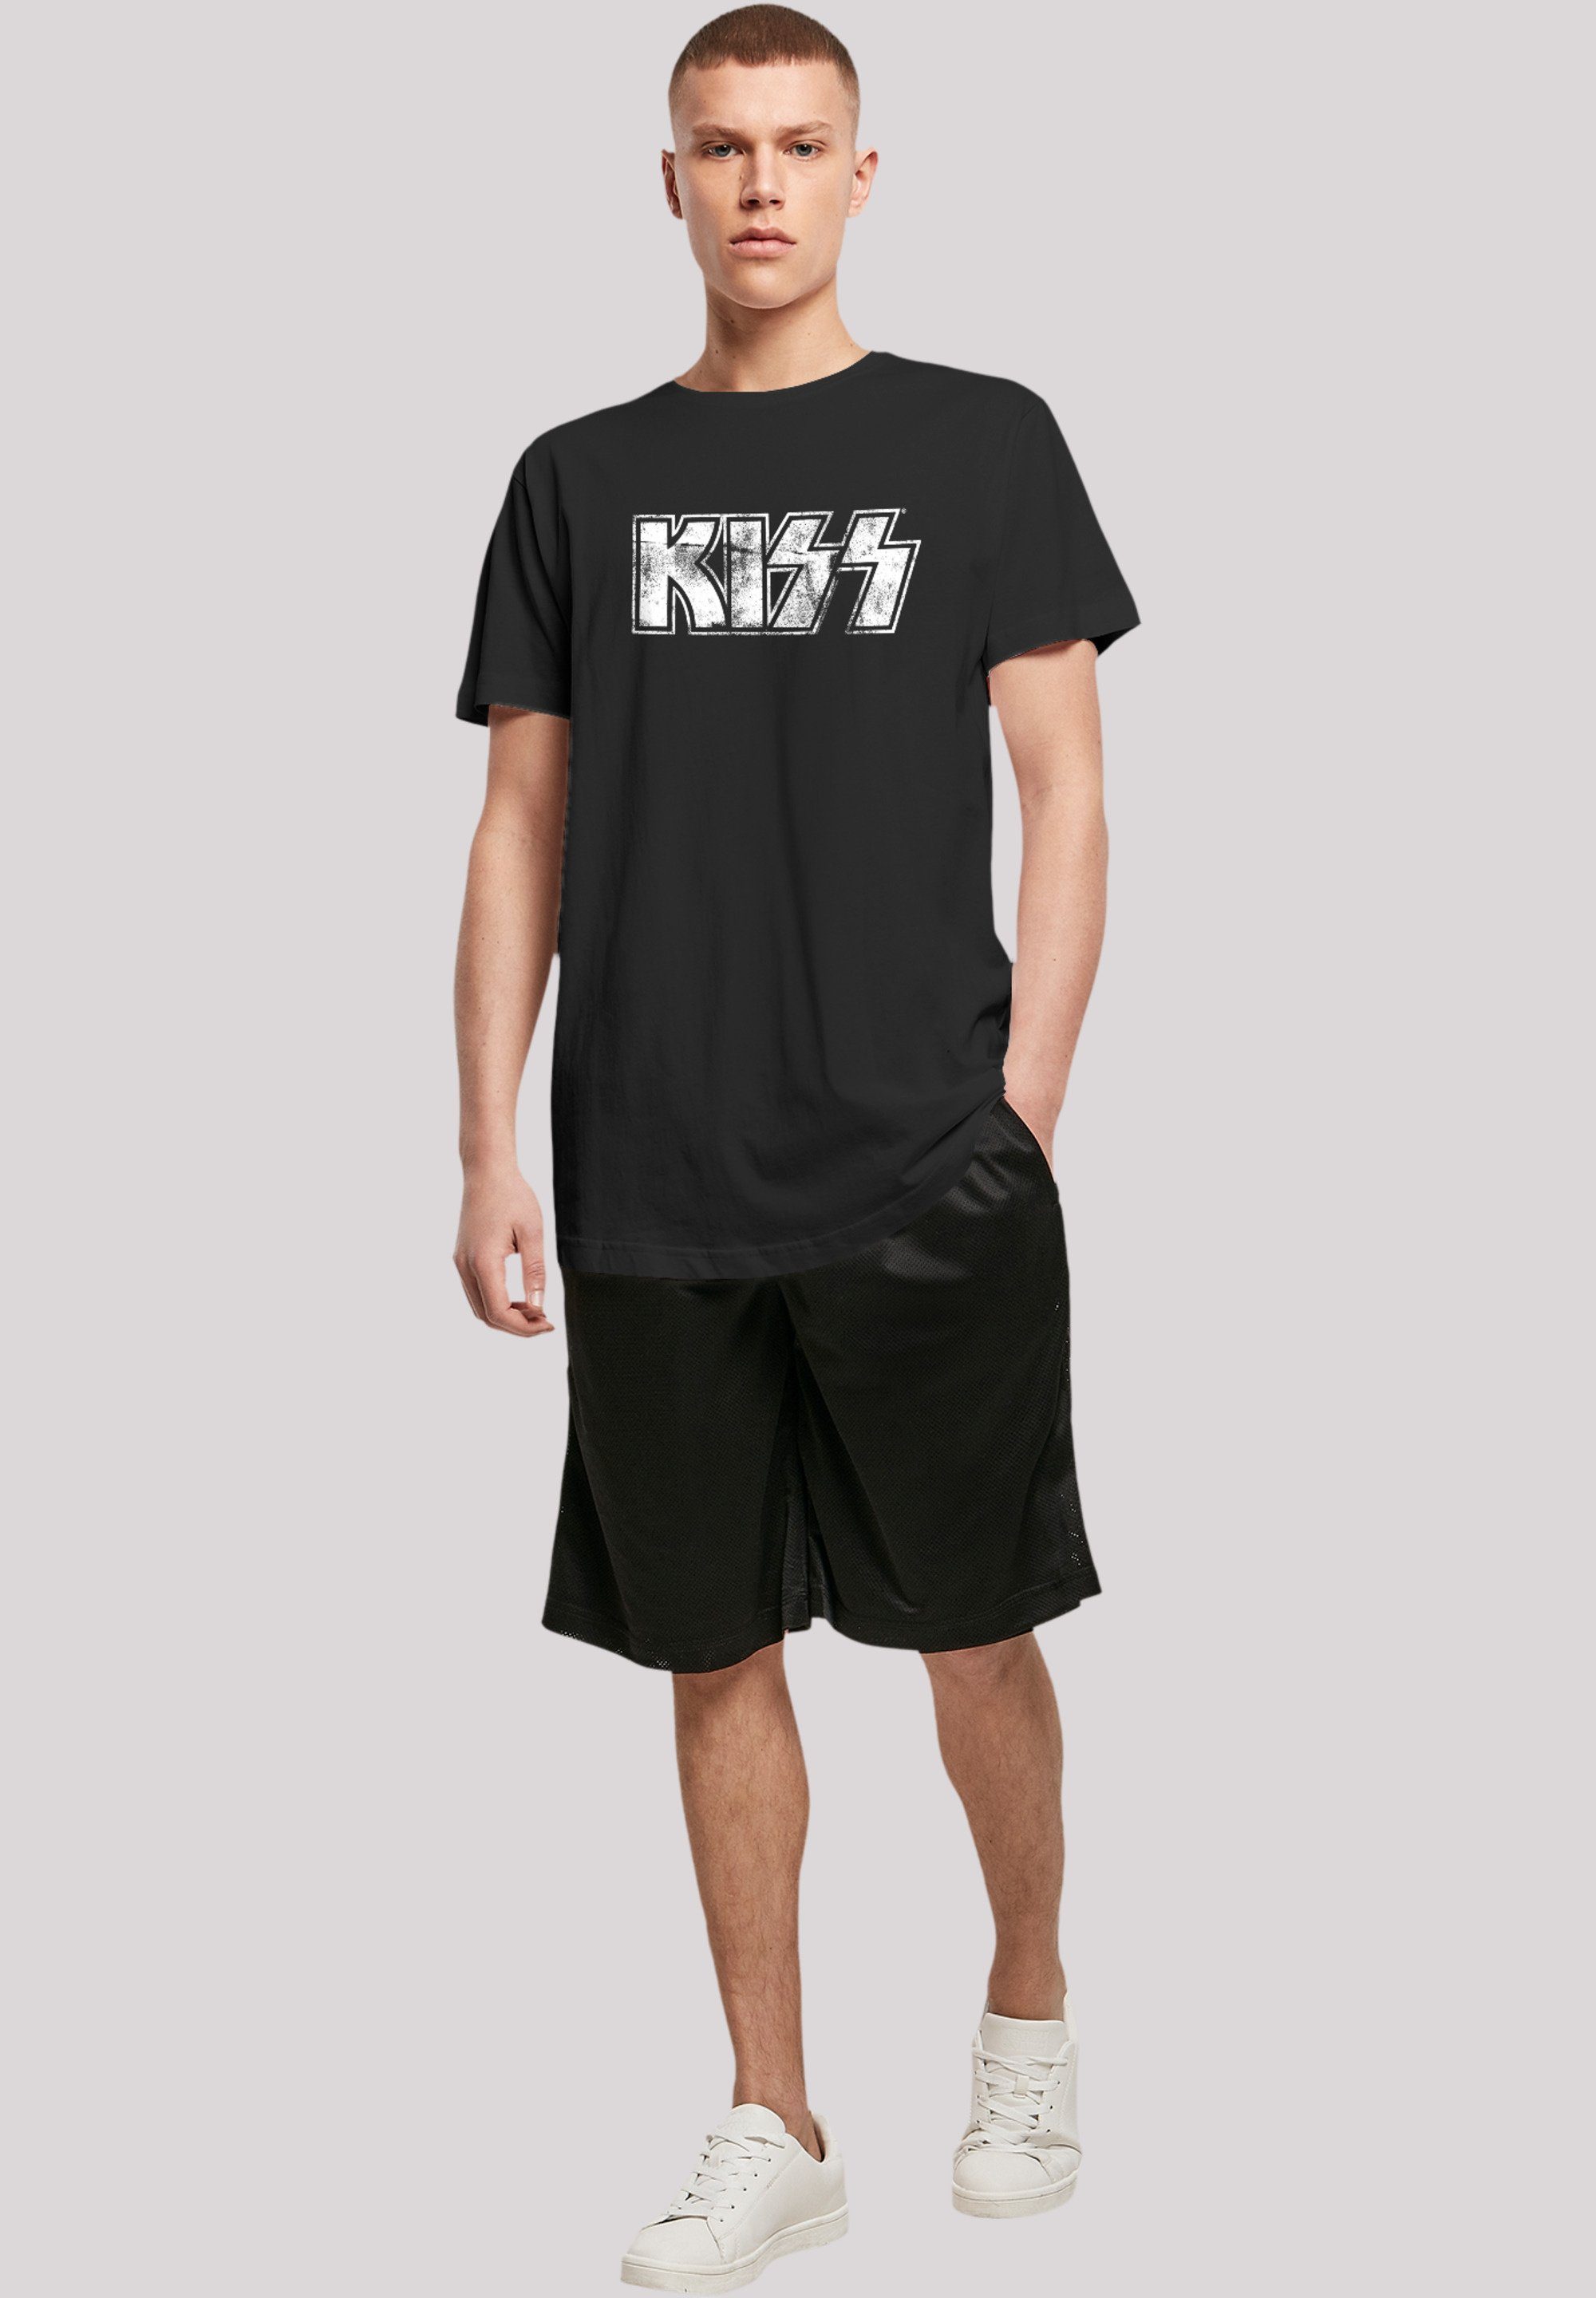 F4NT4STIC T-Shirt Kiss Rock Band Premium Logo Musik, Off Rock Qualität, By Vintage